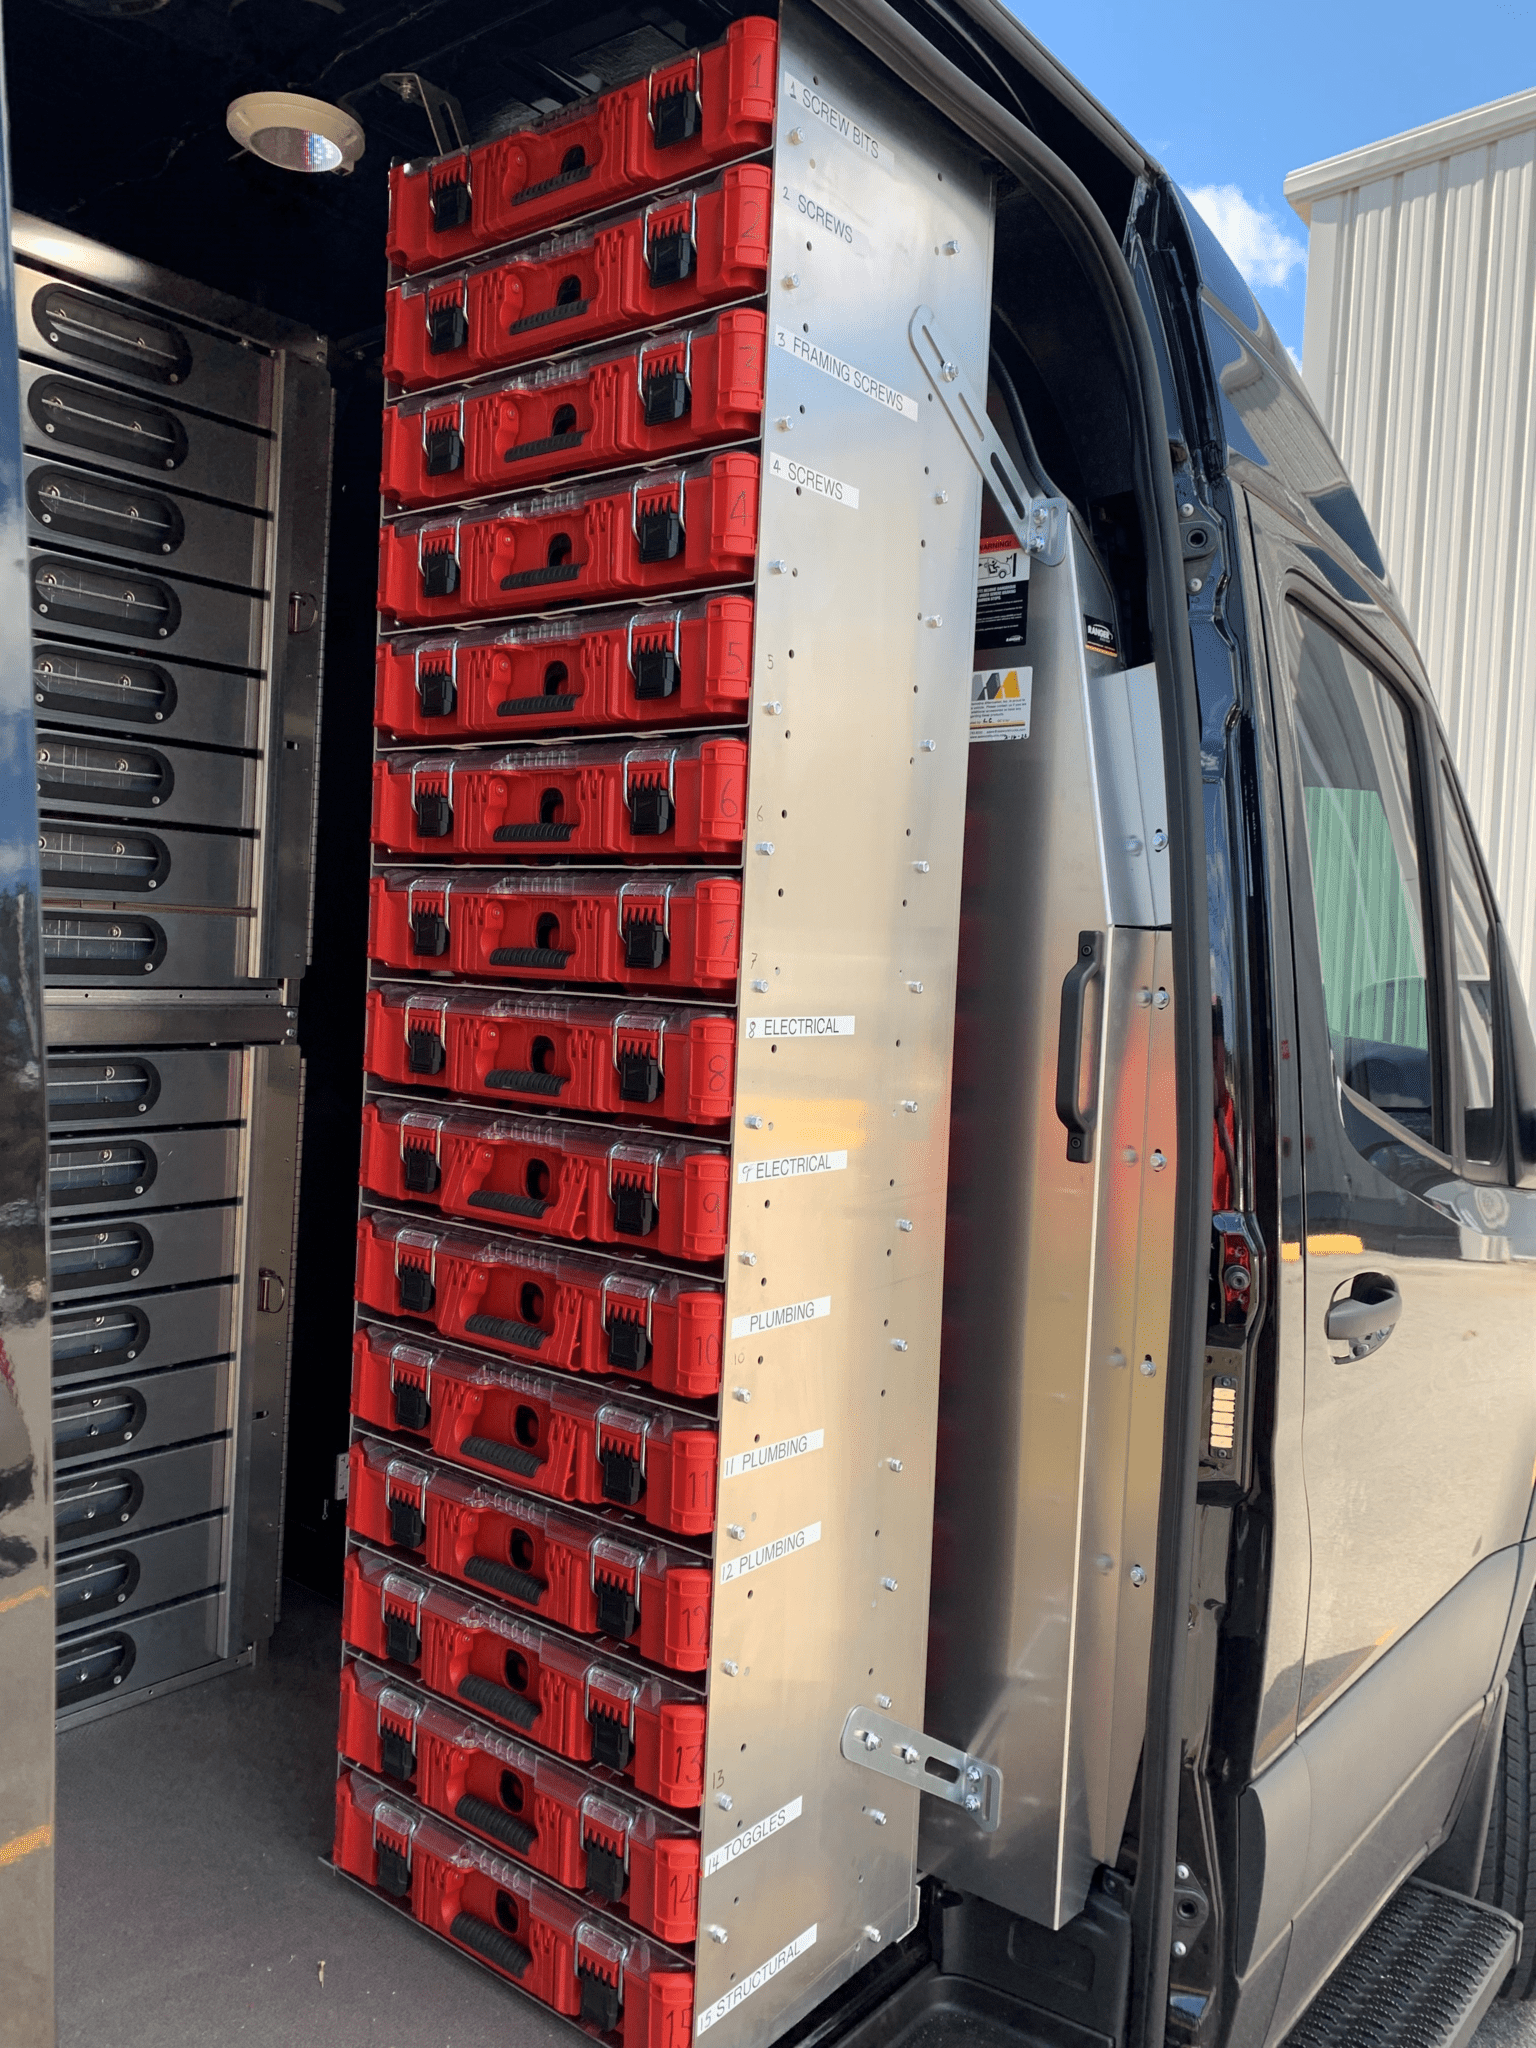 Work Truck & Van Shelving and Storage Bins